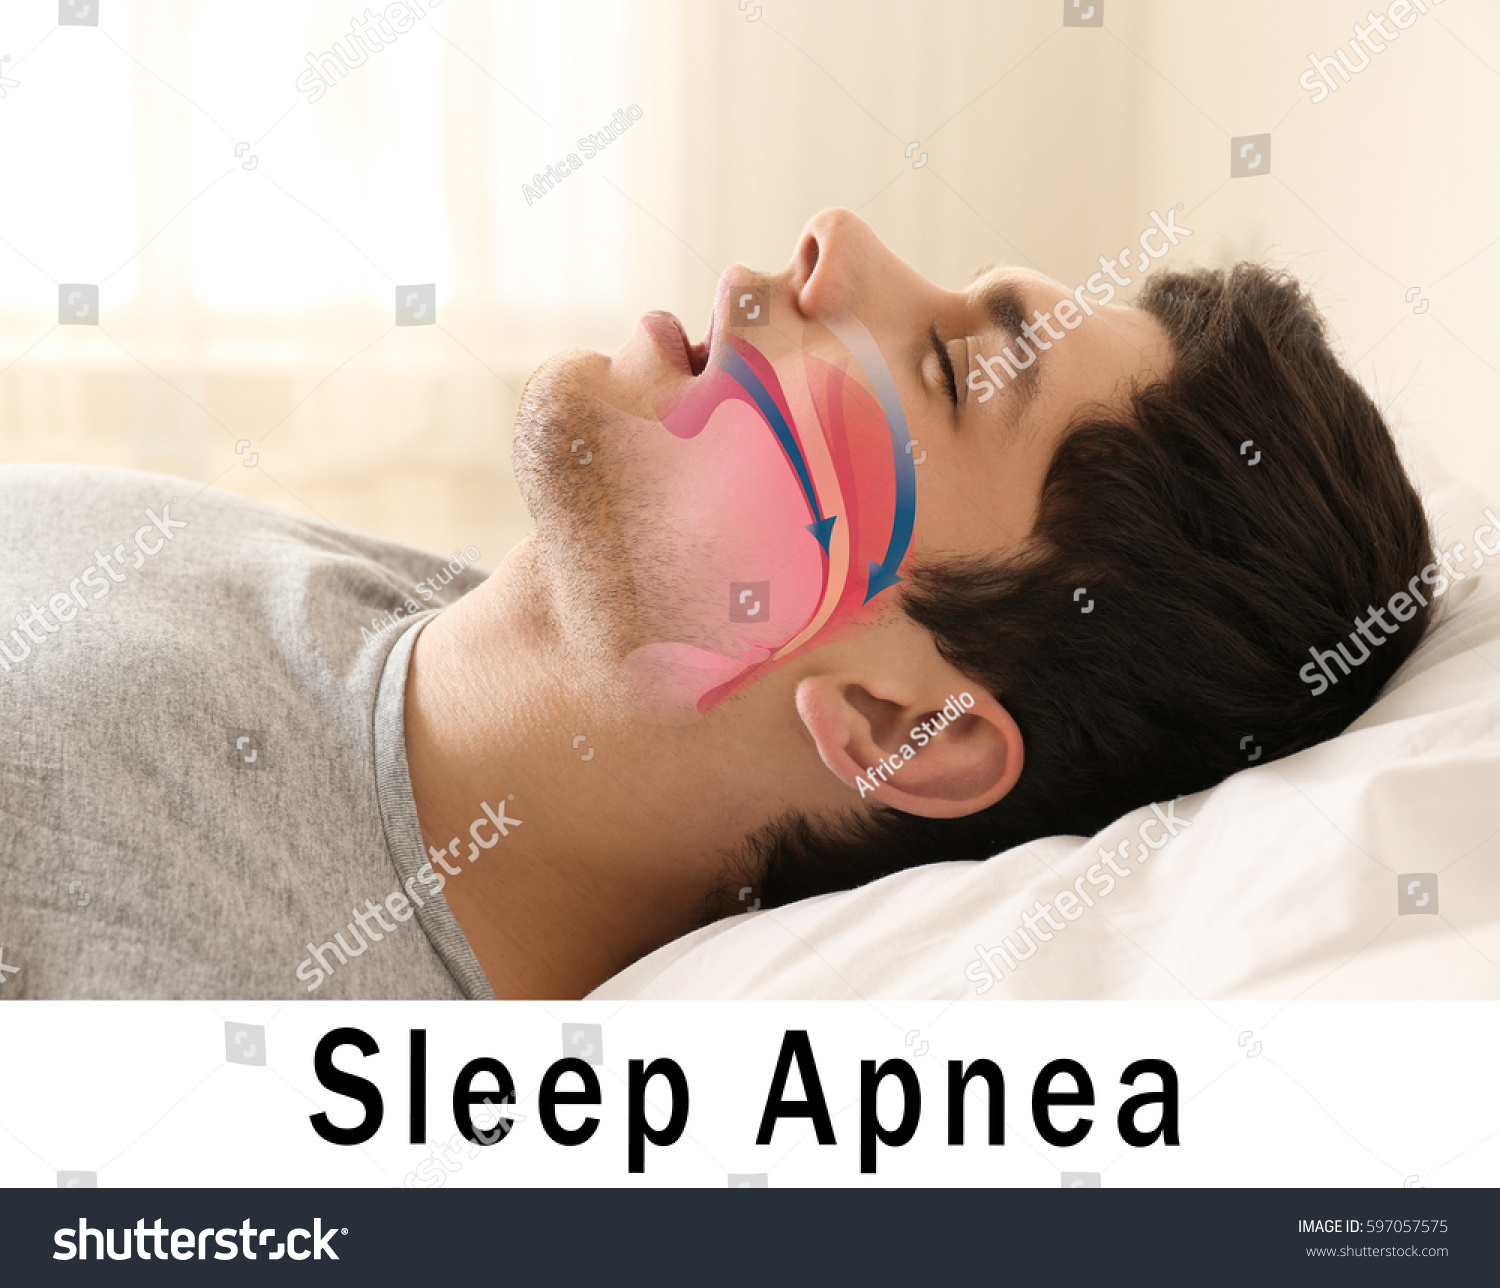 Snore problem concept. Illustration of obstructive sleep apnea #597057575